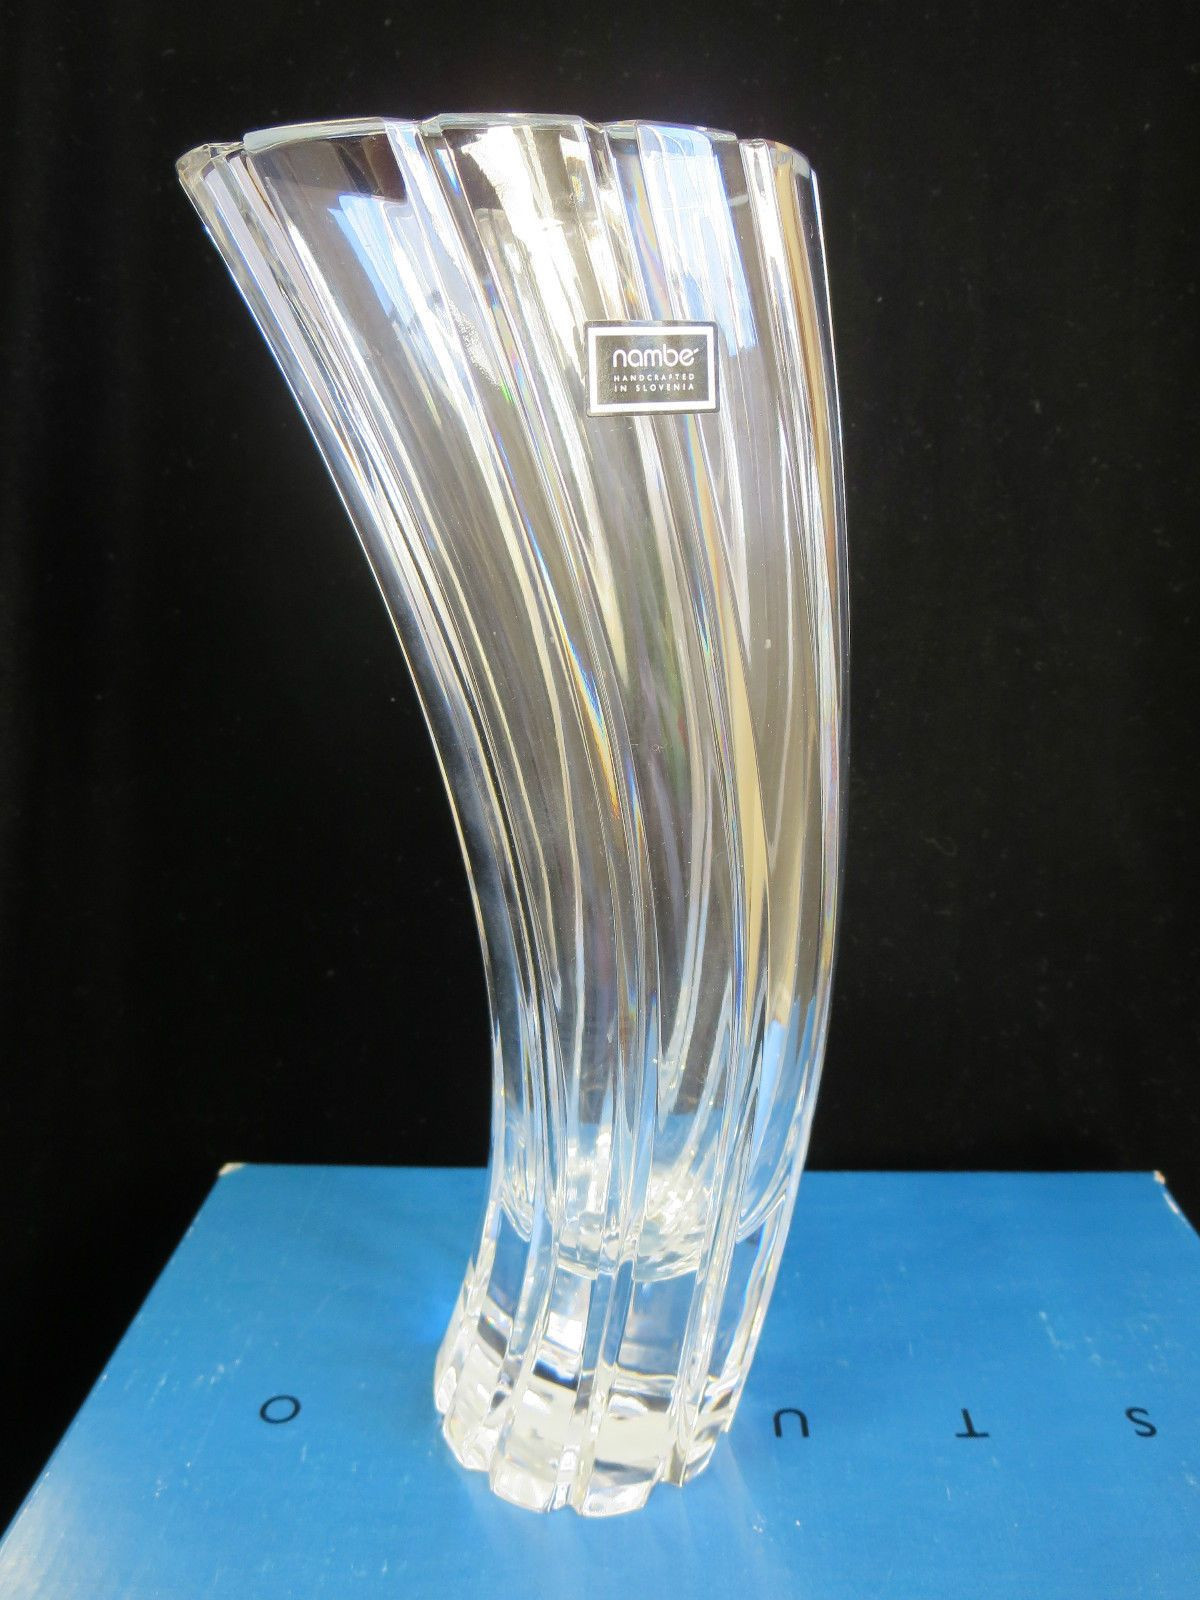 12 attractive Macys Crystal Vase 2024 free download macys crystal vase of nambe crystal 5207 swoop vase new 8 5h x 3 5 w at top x 2 5 w regarding nambe crystal 5207 swoop vase new 8 5h x 3 5 w at top x 2 5 w at bottom